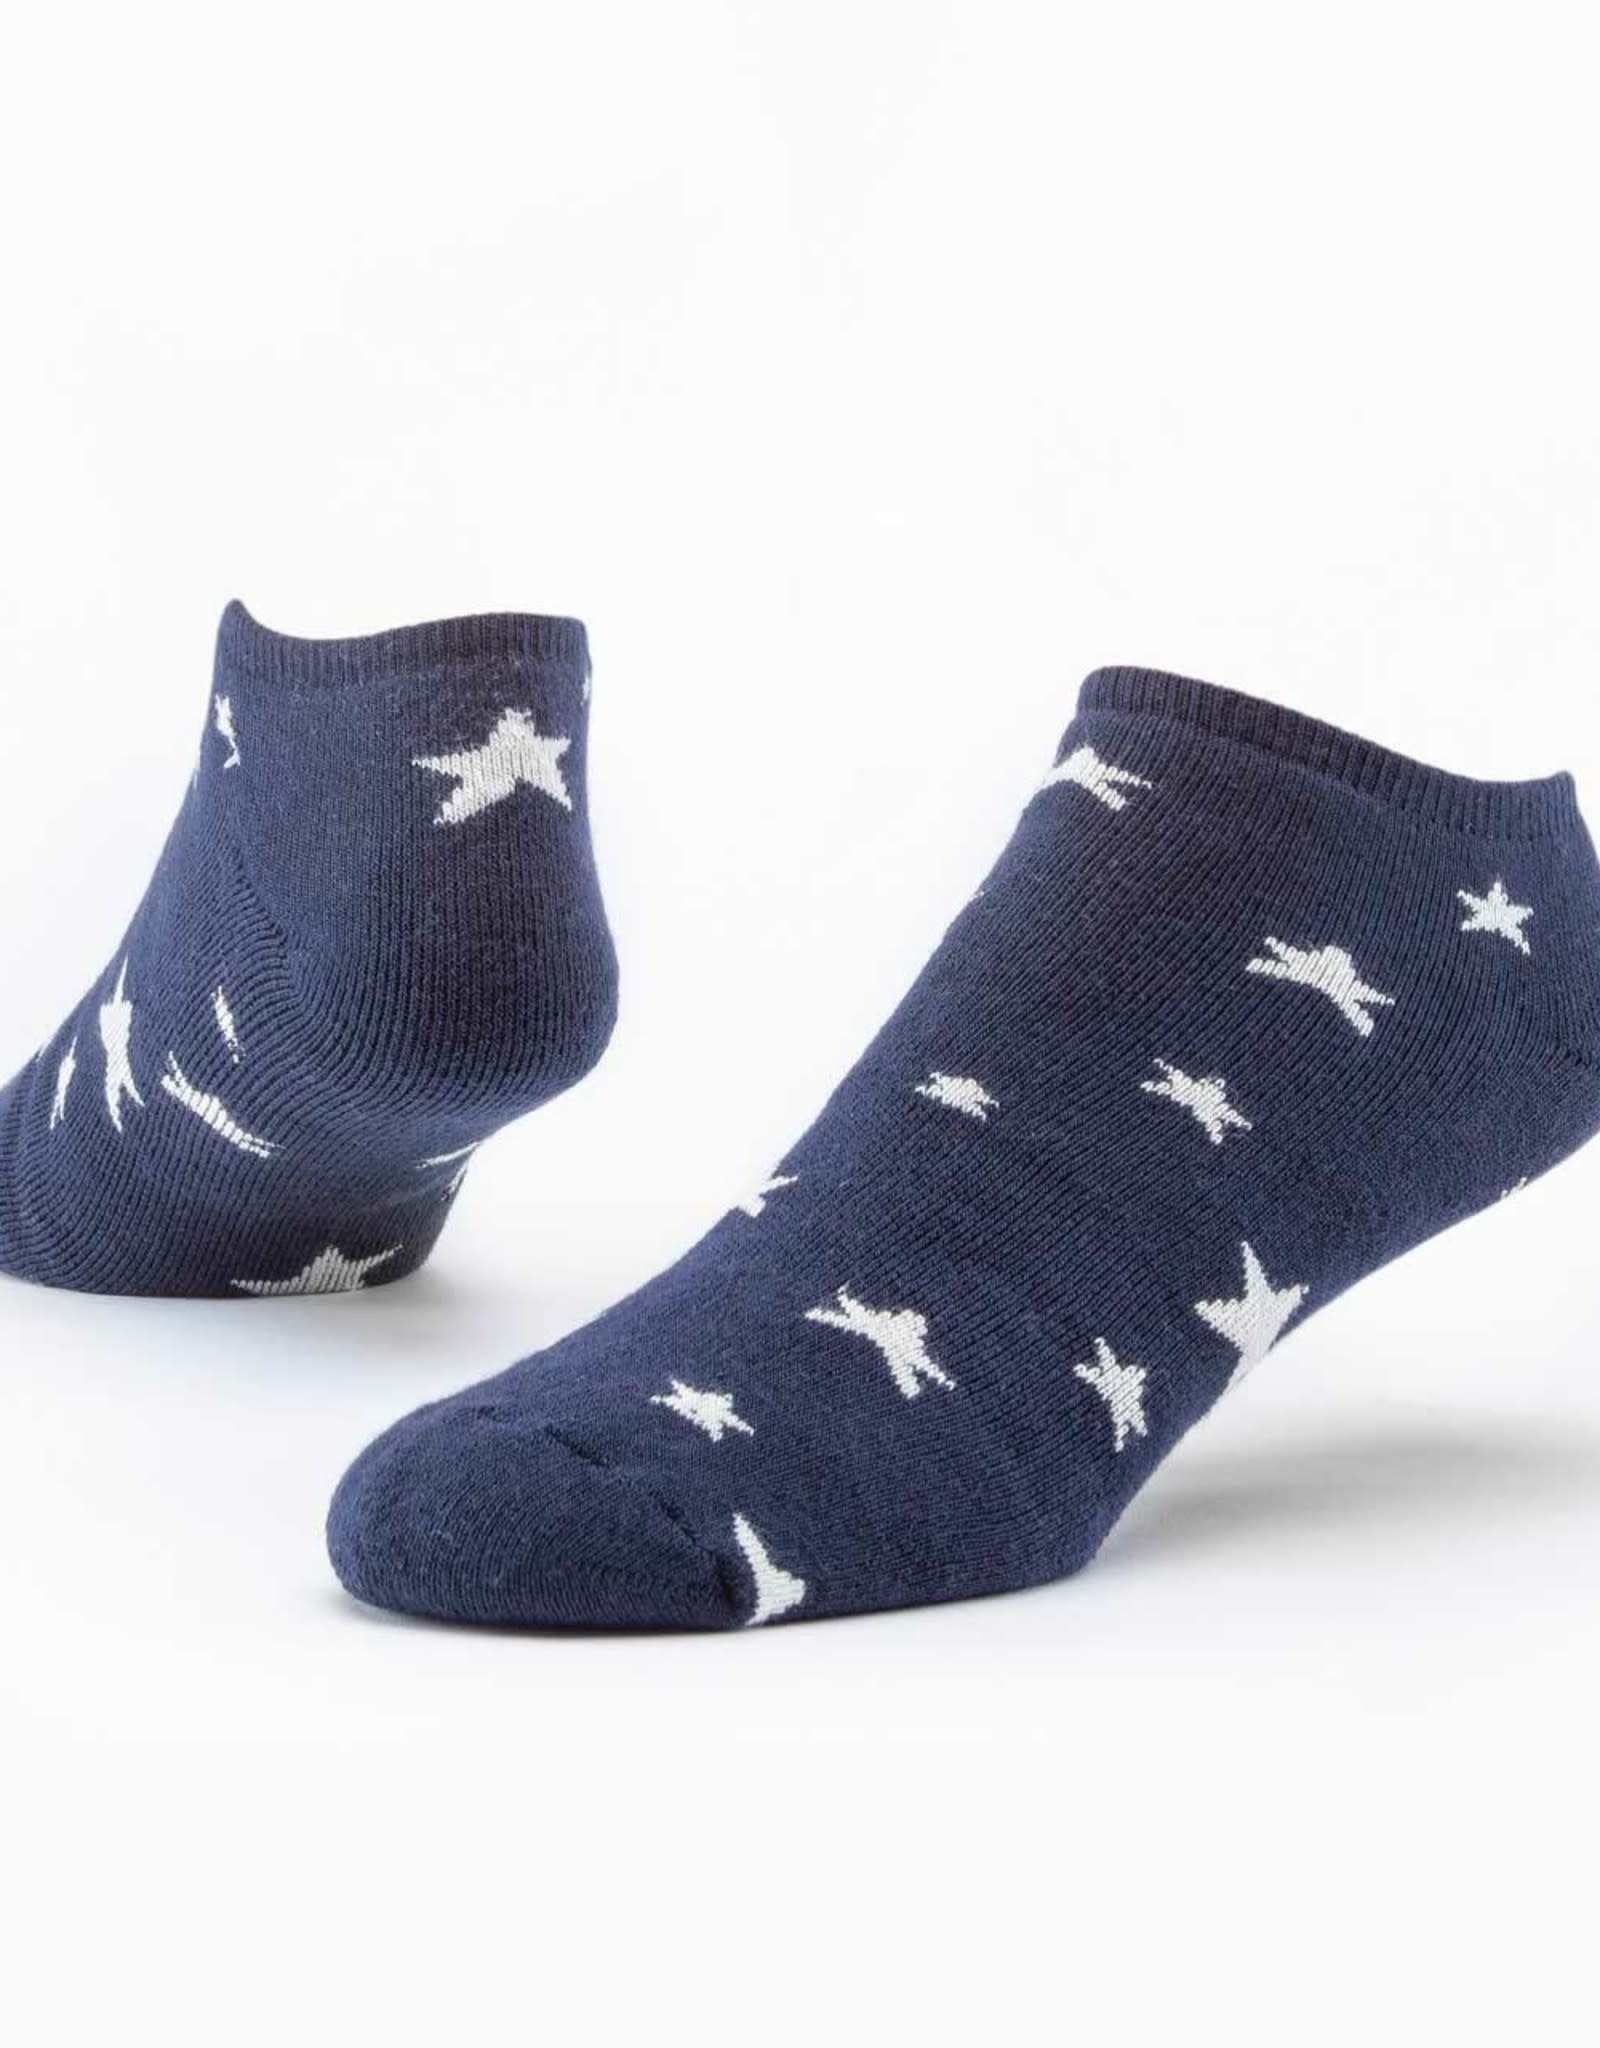 Maggie's Organics Footie Socks (Navy Star)